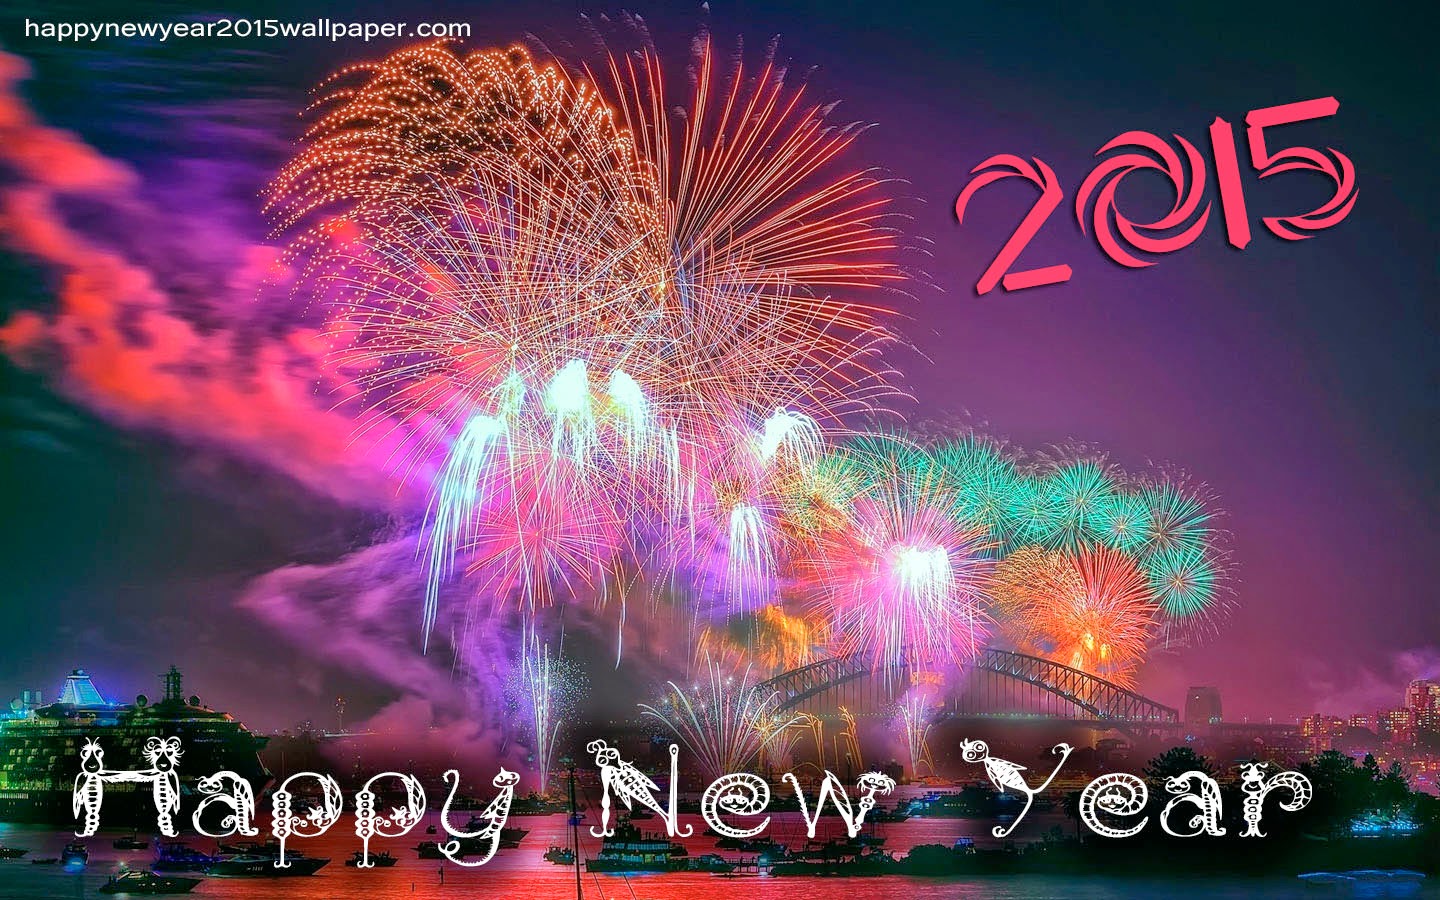 Happy New Year HD Wallpaper Image Photos